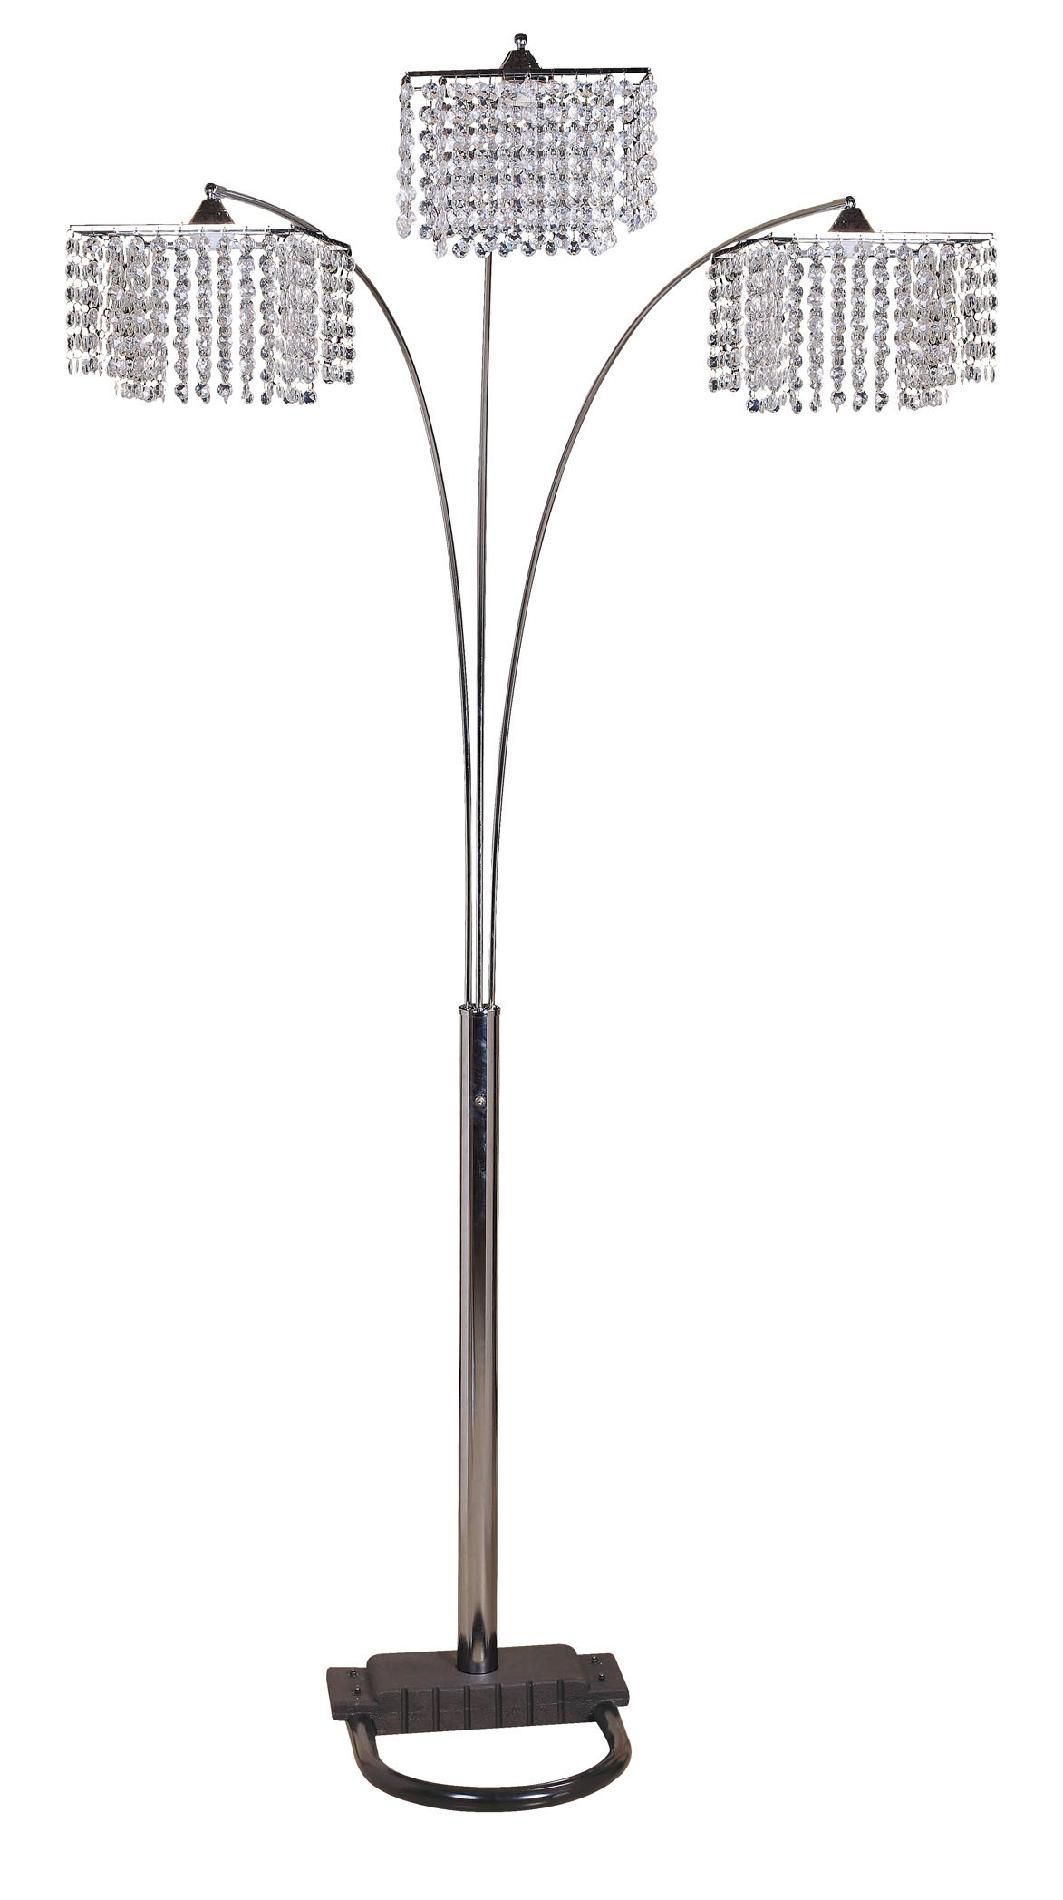 Standing Chandelier Lamp Campernel Designs Pertaining To Tall Standing Chandelier Lamps (View 6 of 25)